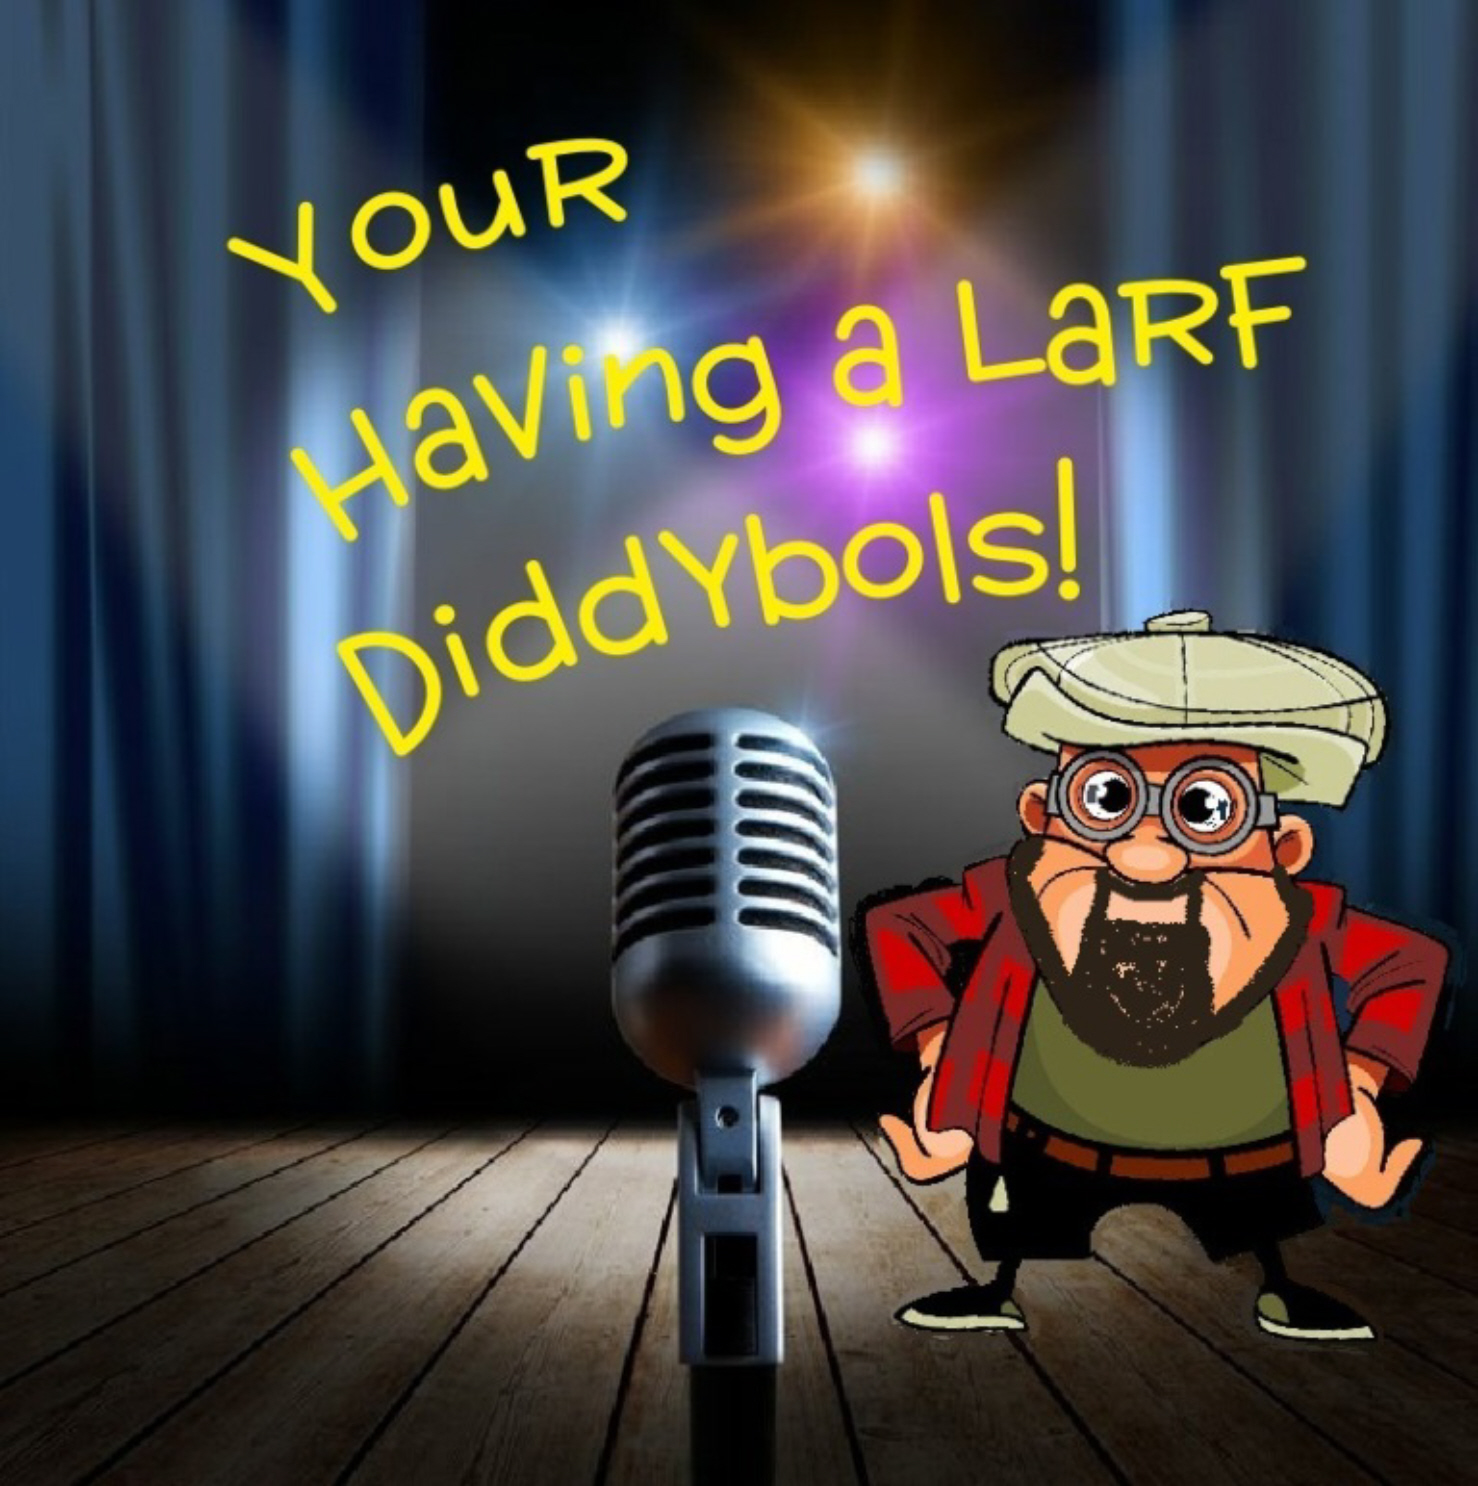 DiddyBols Podcast Theme Tune